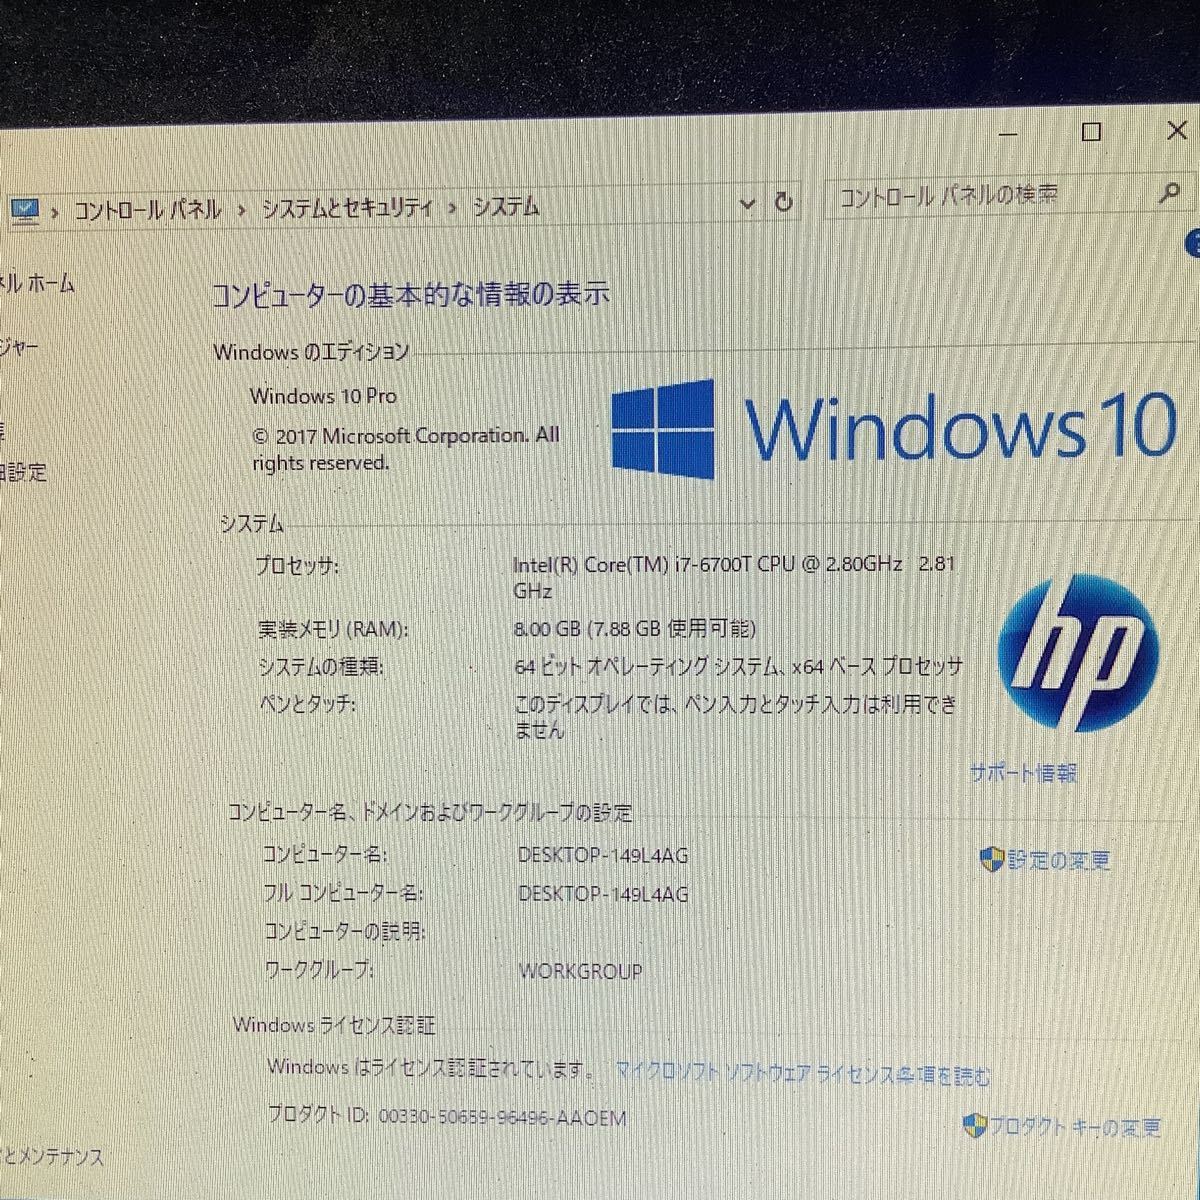 hpミニパソコンWin10 Core i7 中古品動作チェック画像記載まで確認済みです。_画像5